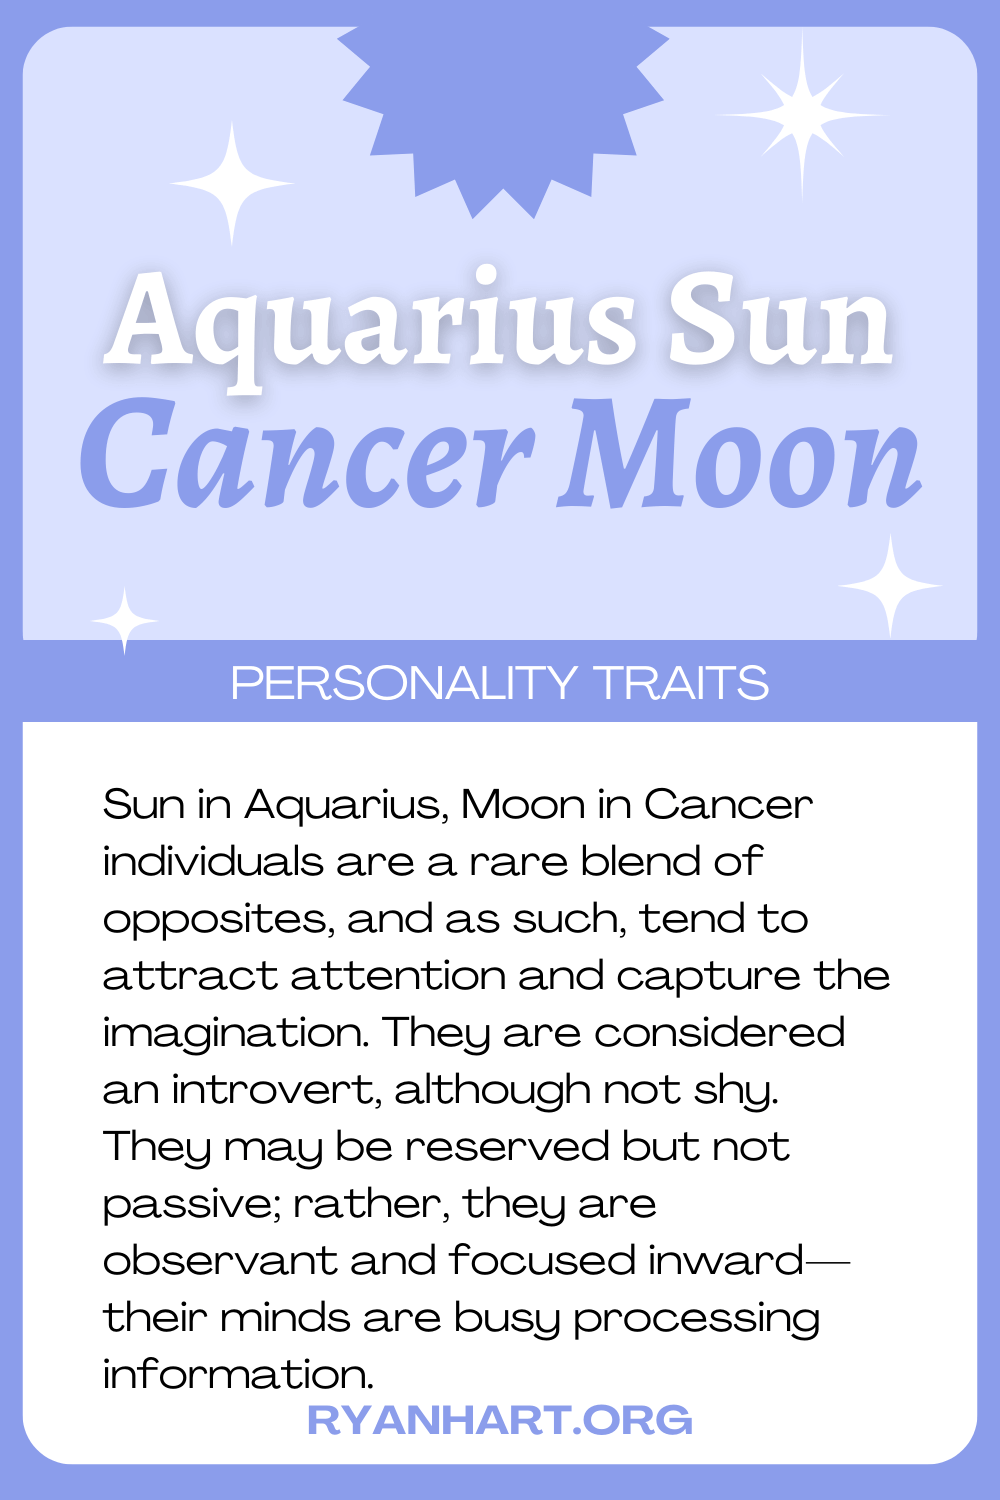  Aquarius Sun Cancer လ စရိုက်လက္ခဏာများ